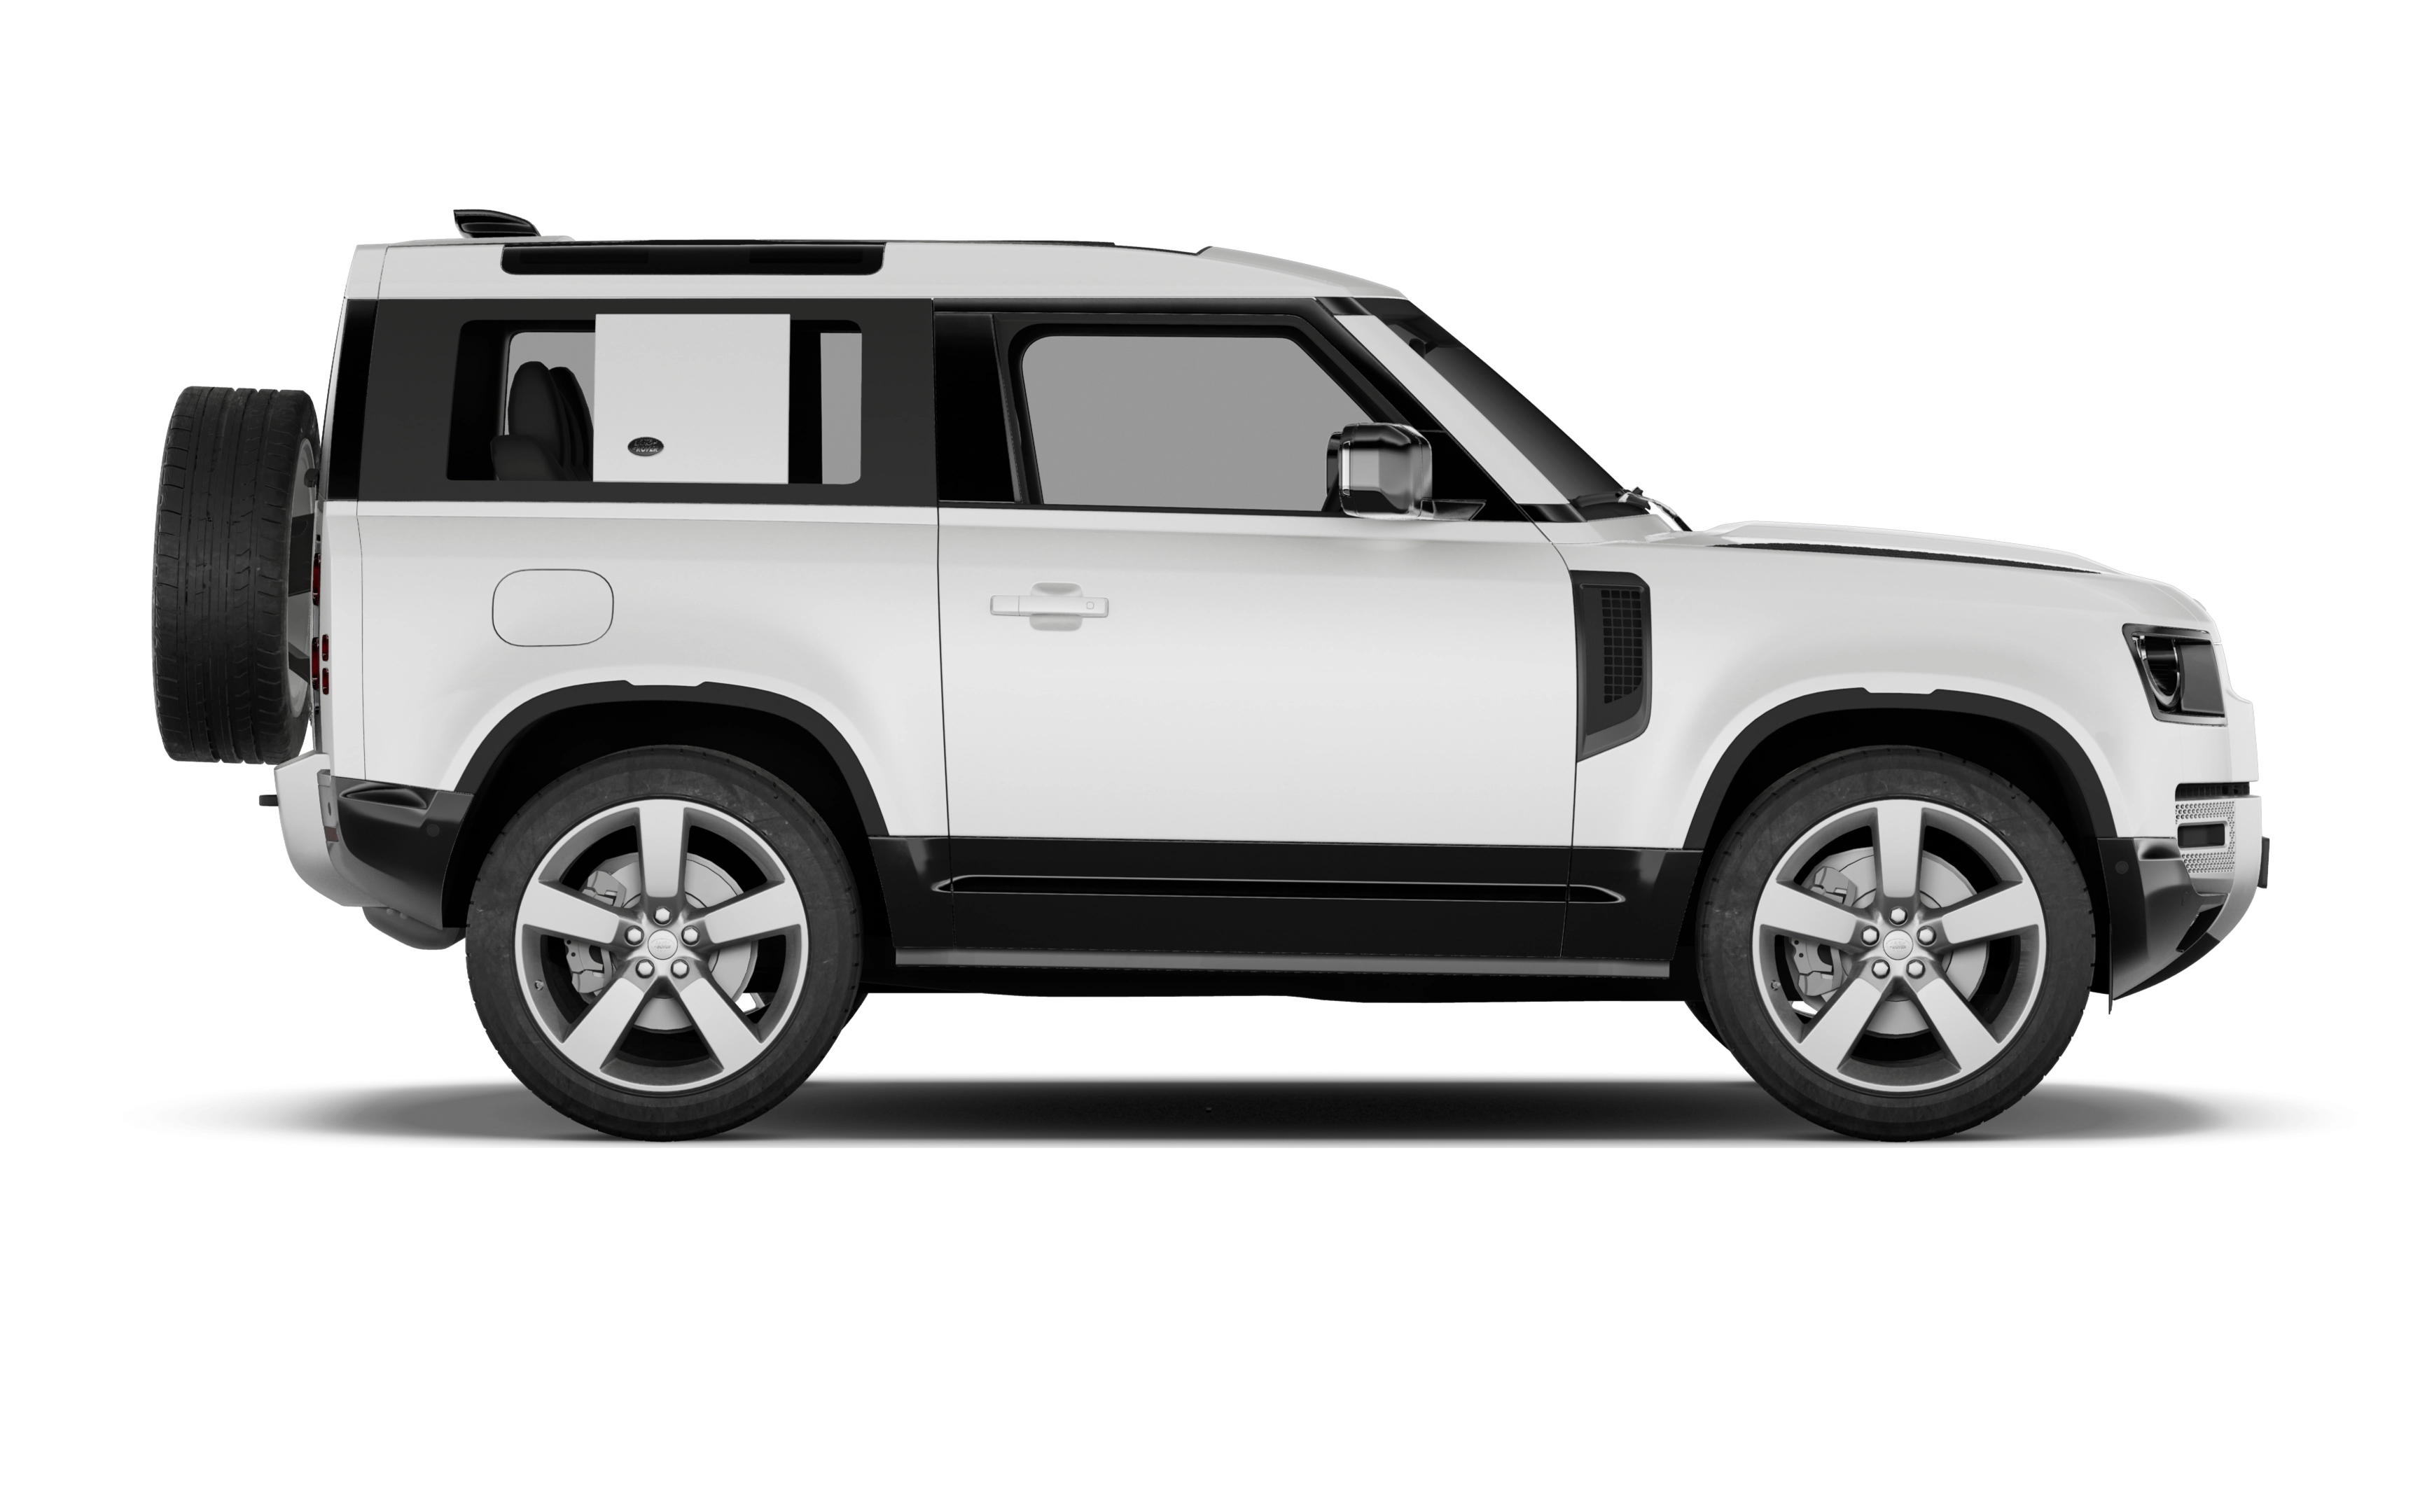 Land rover defender estate 3.0 d300 x-dynamic s 110 5 doors auto [7 seat]